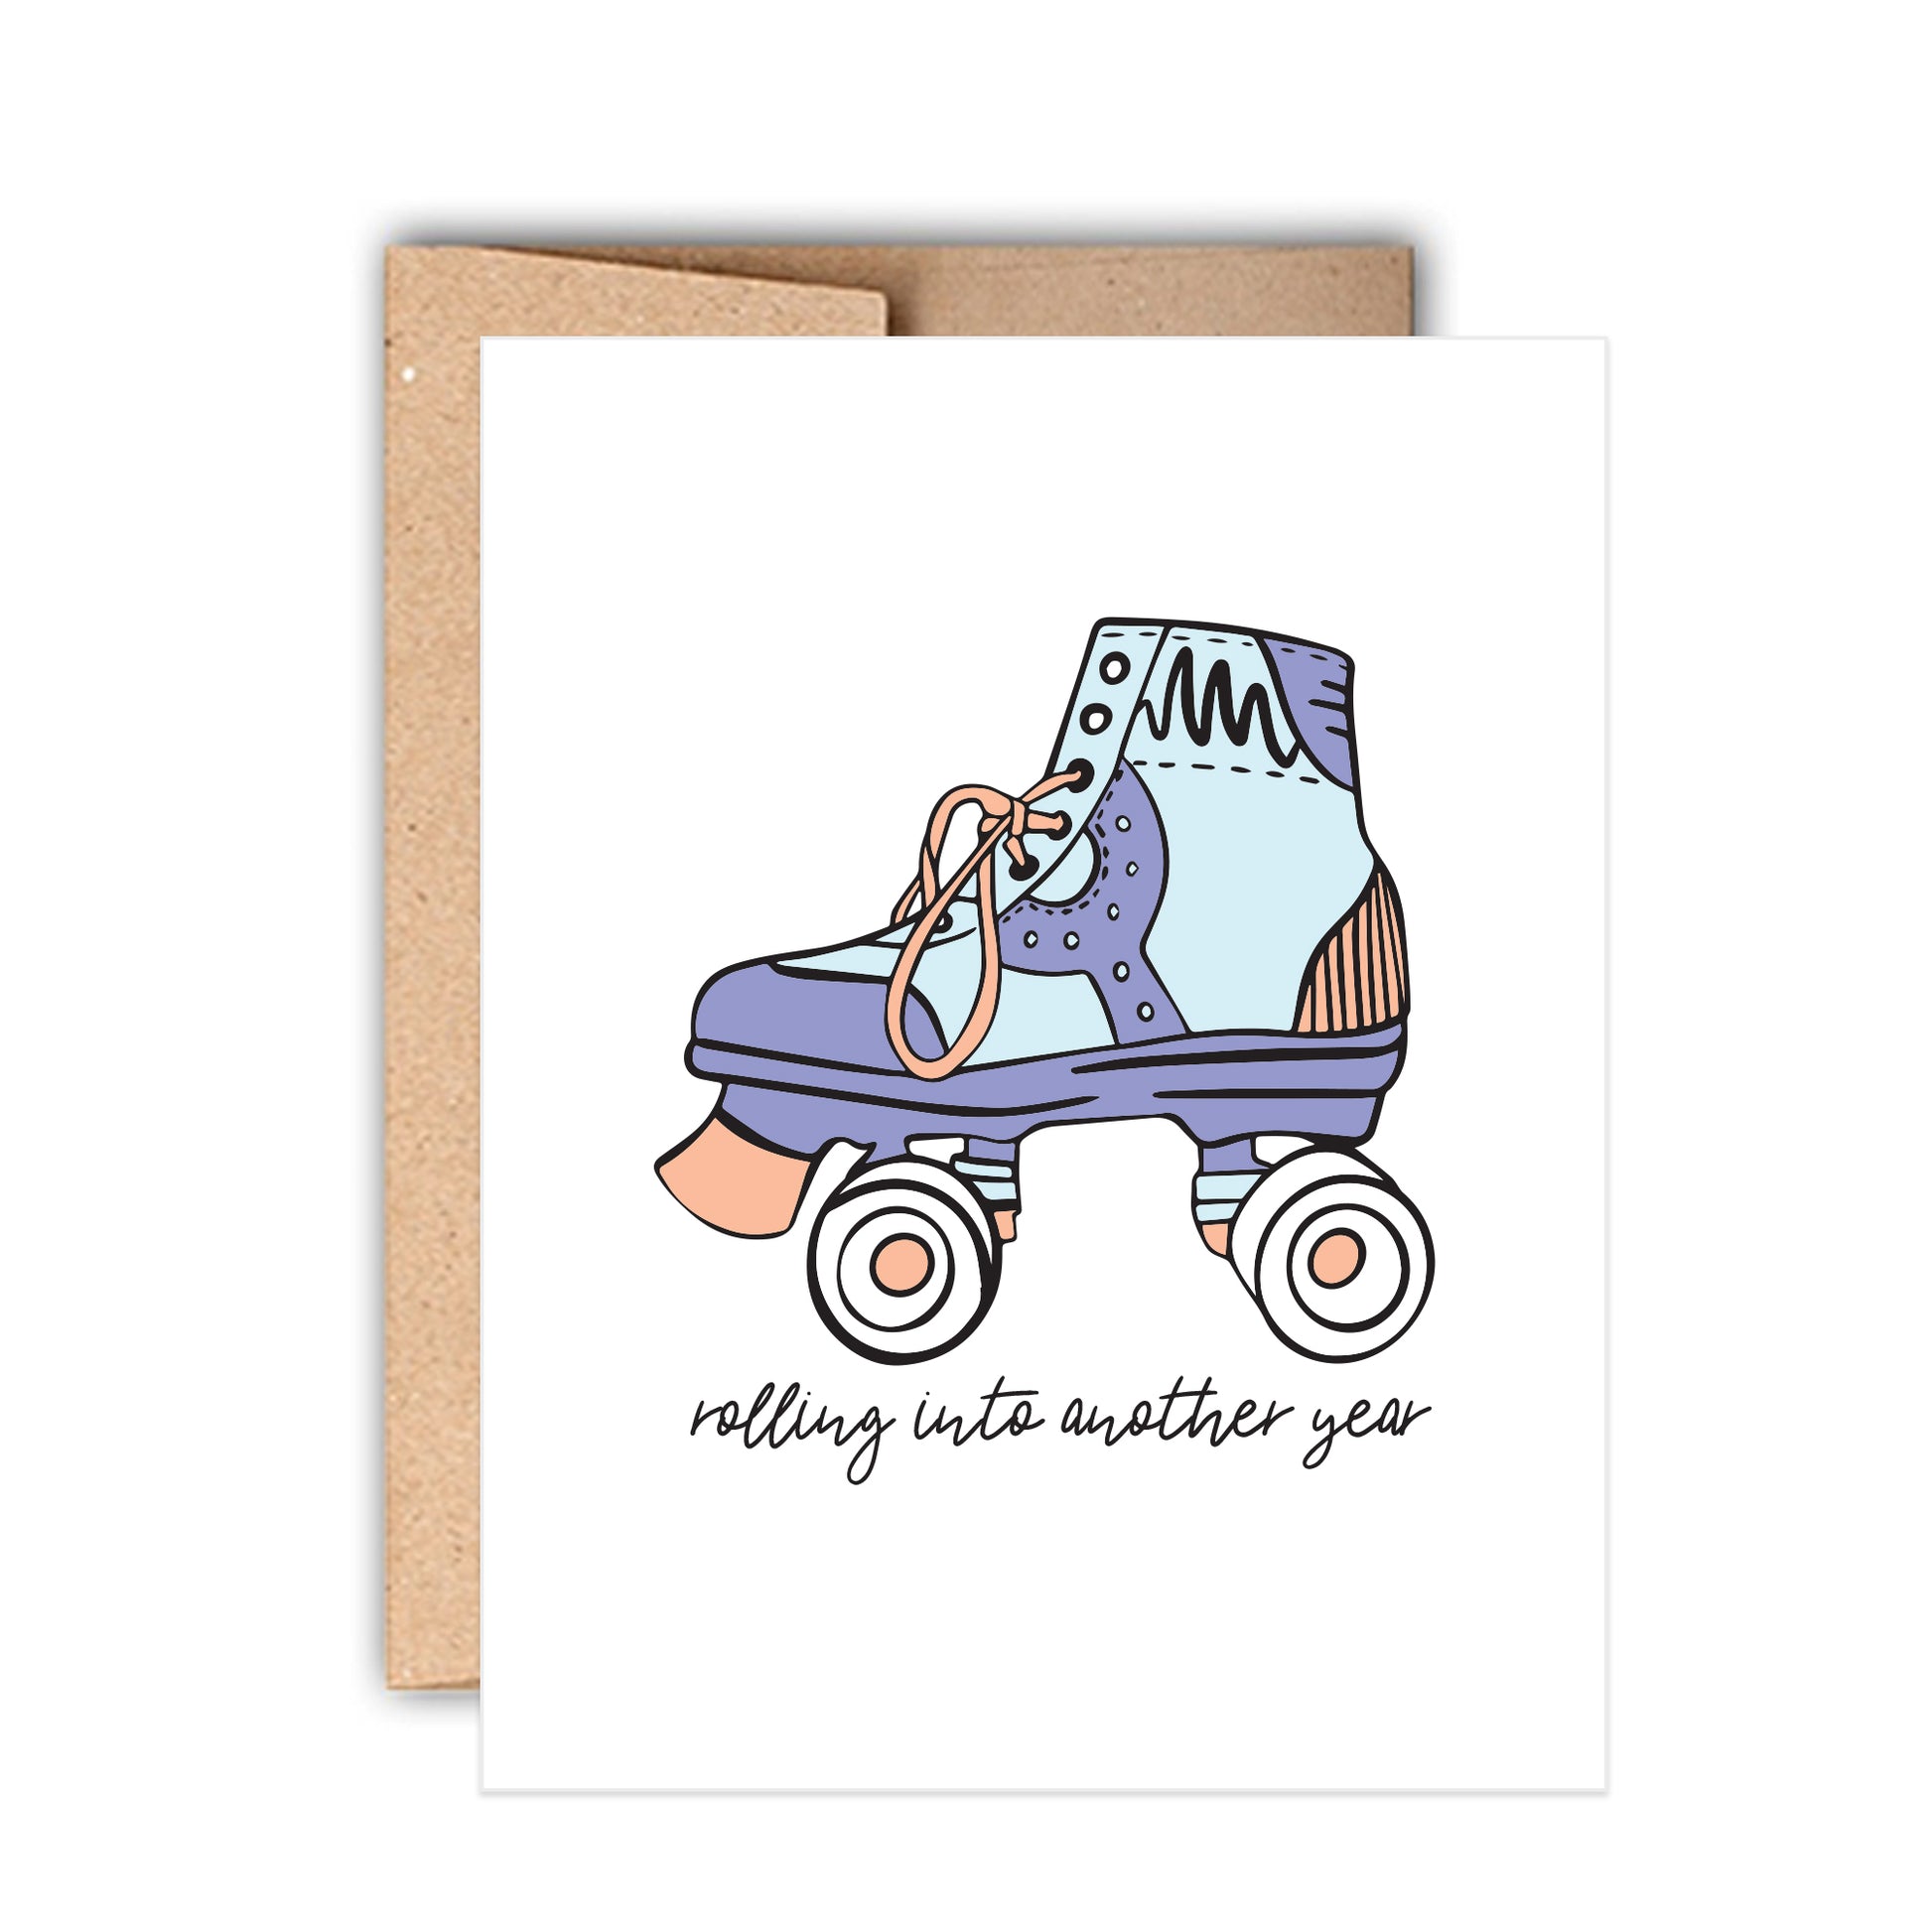 Roller Skate Retro Birthday Card